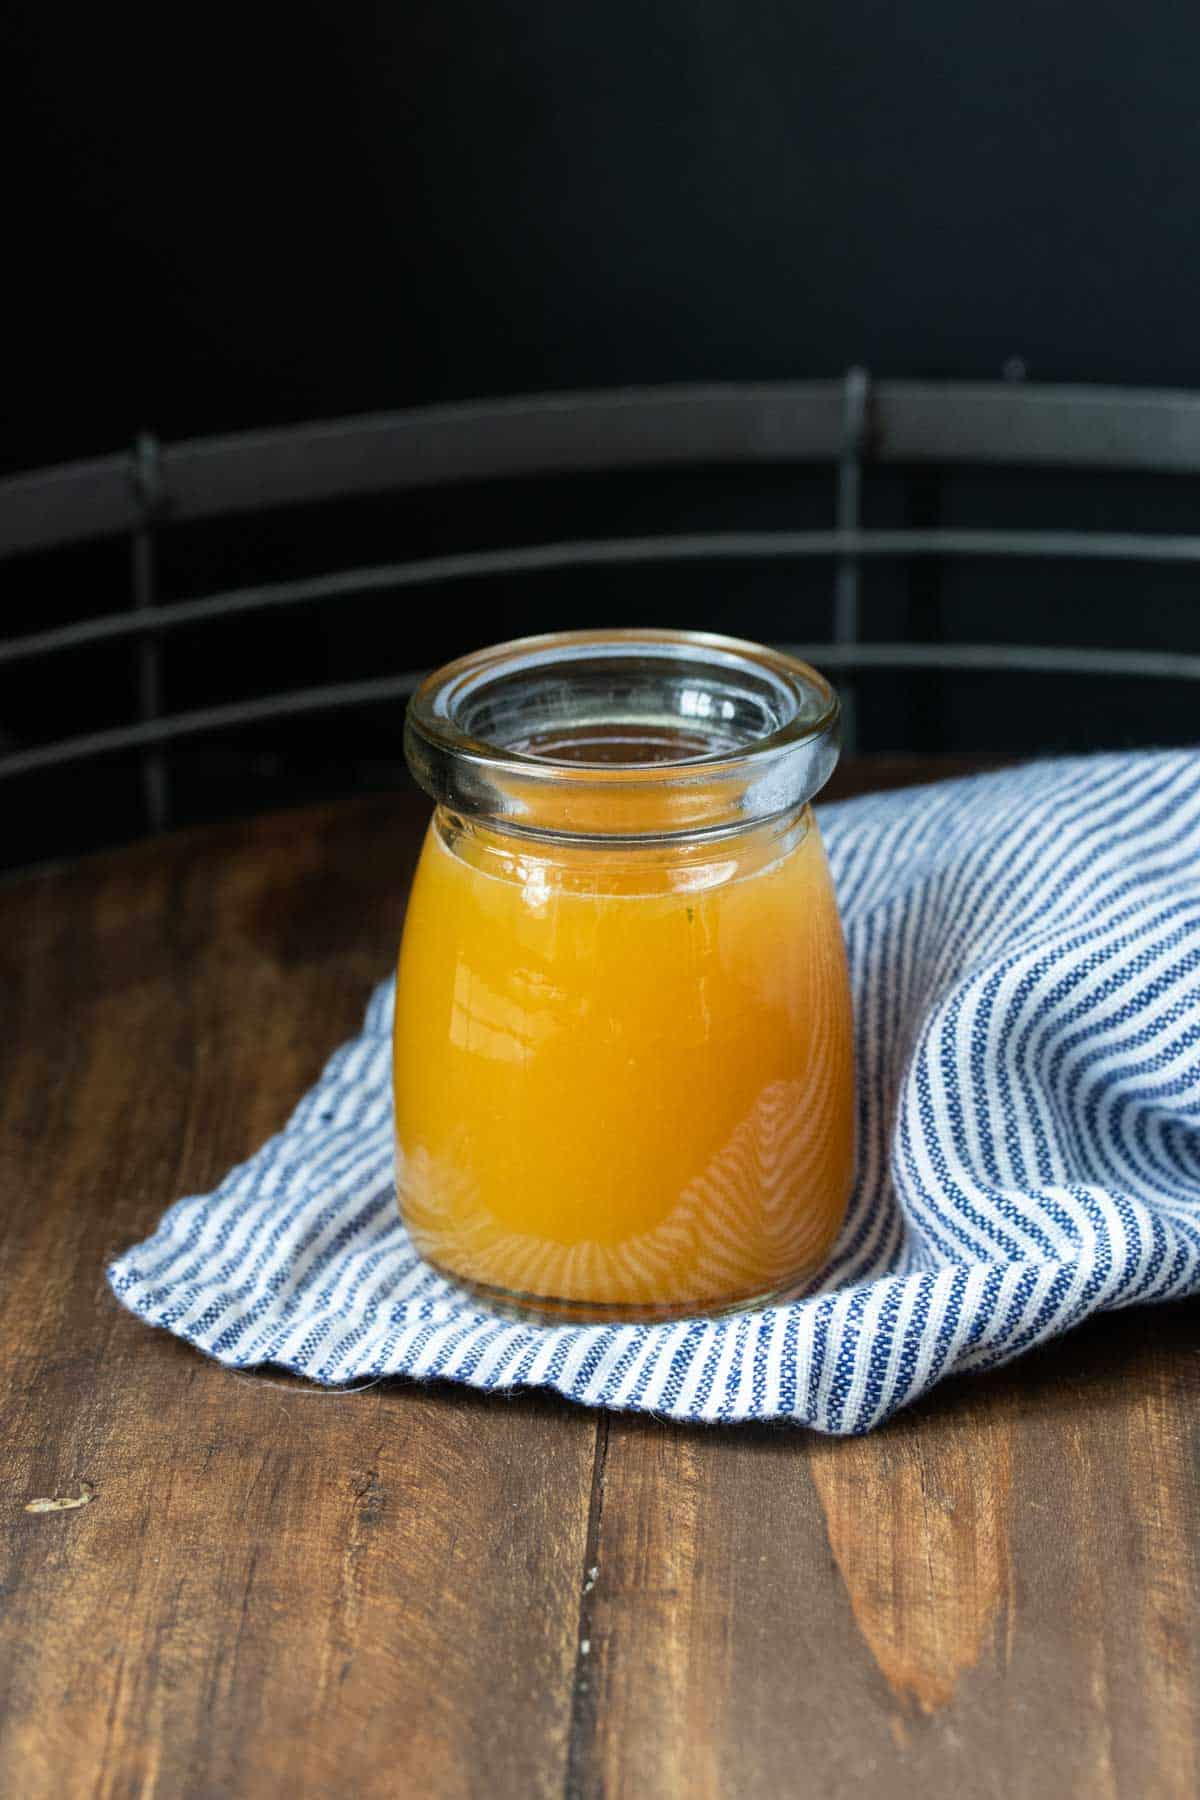 Glass jar with an orange liquid in it